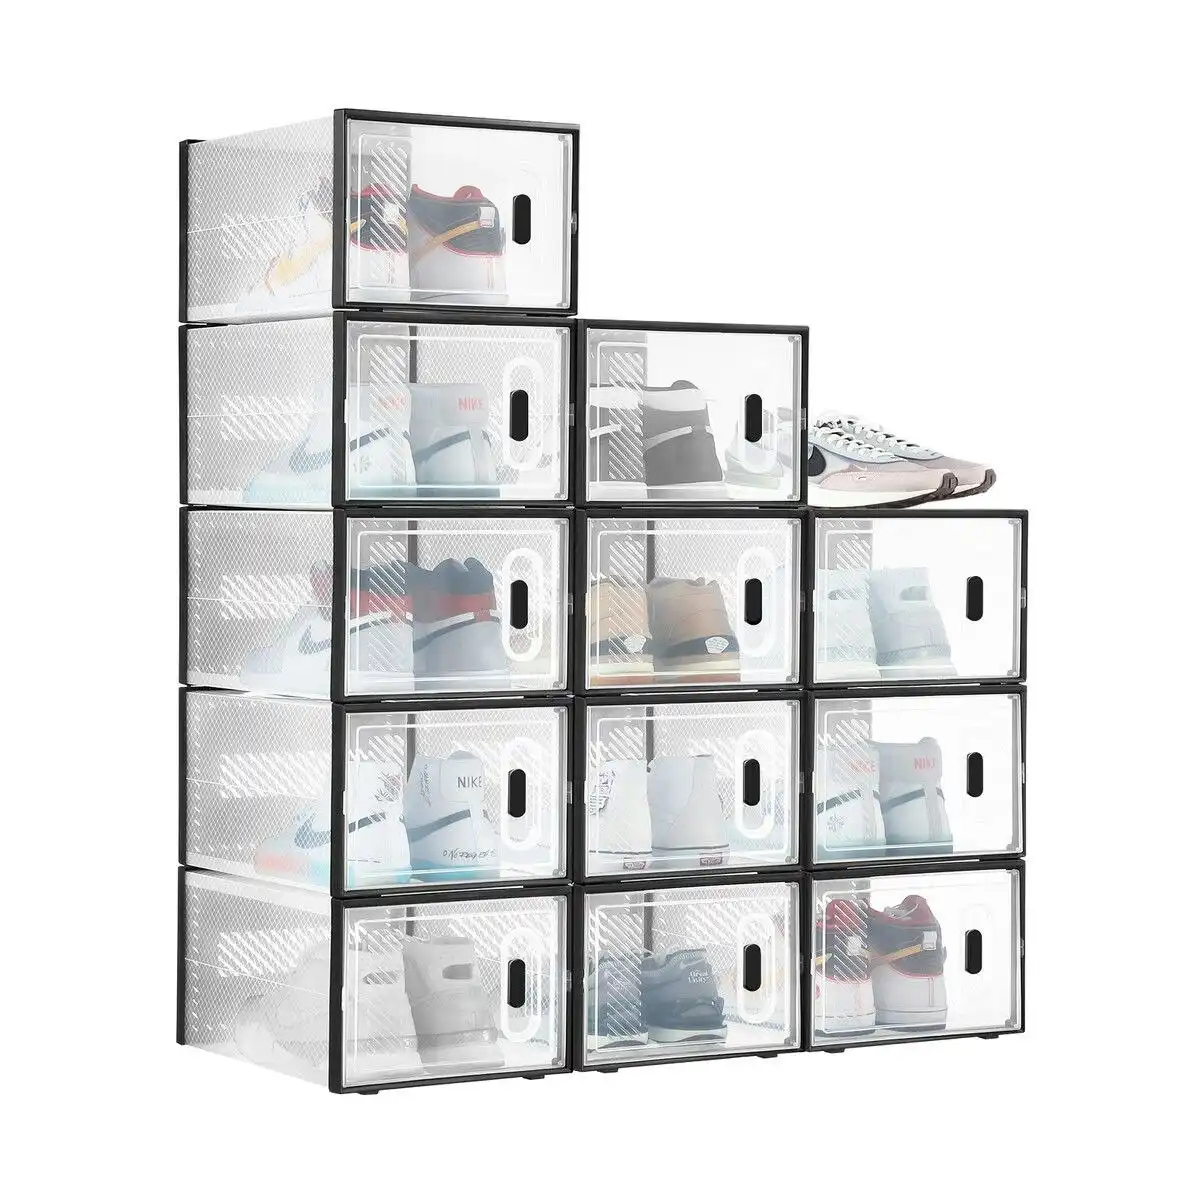 LUXSUITE 12PCS Plastic Shoe Boxes Clear Organiser Stackable Transparent Storage Display Cases Sneaker Containers Holder Bins Organizer Unit